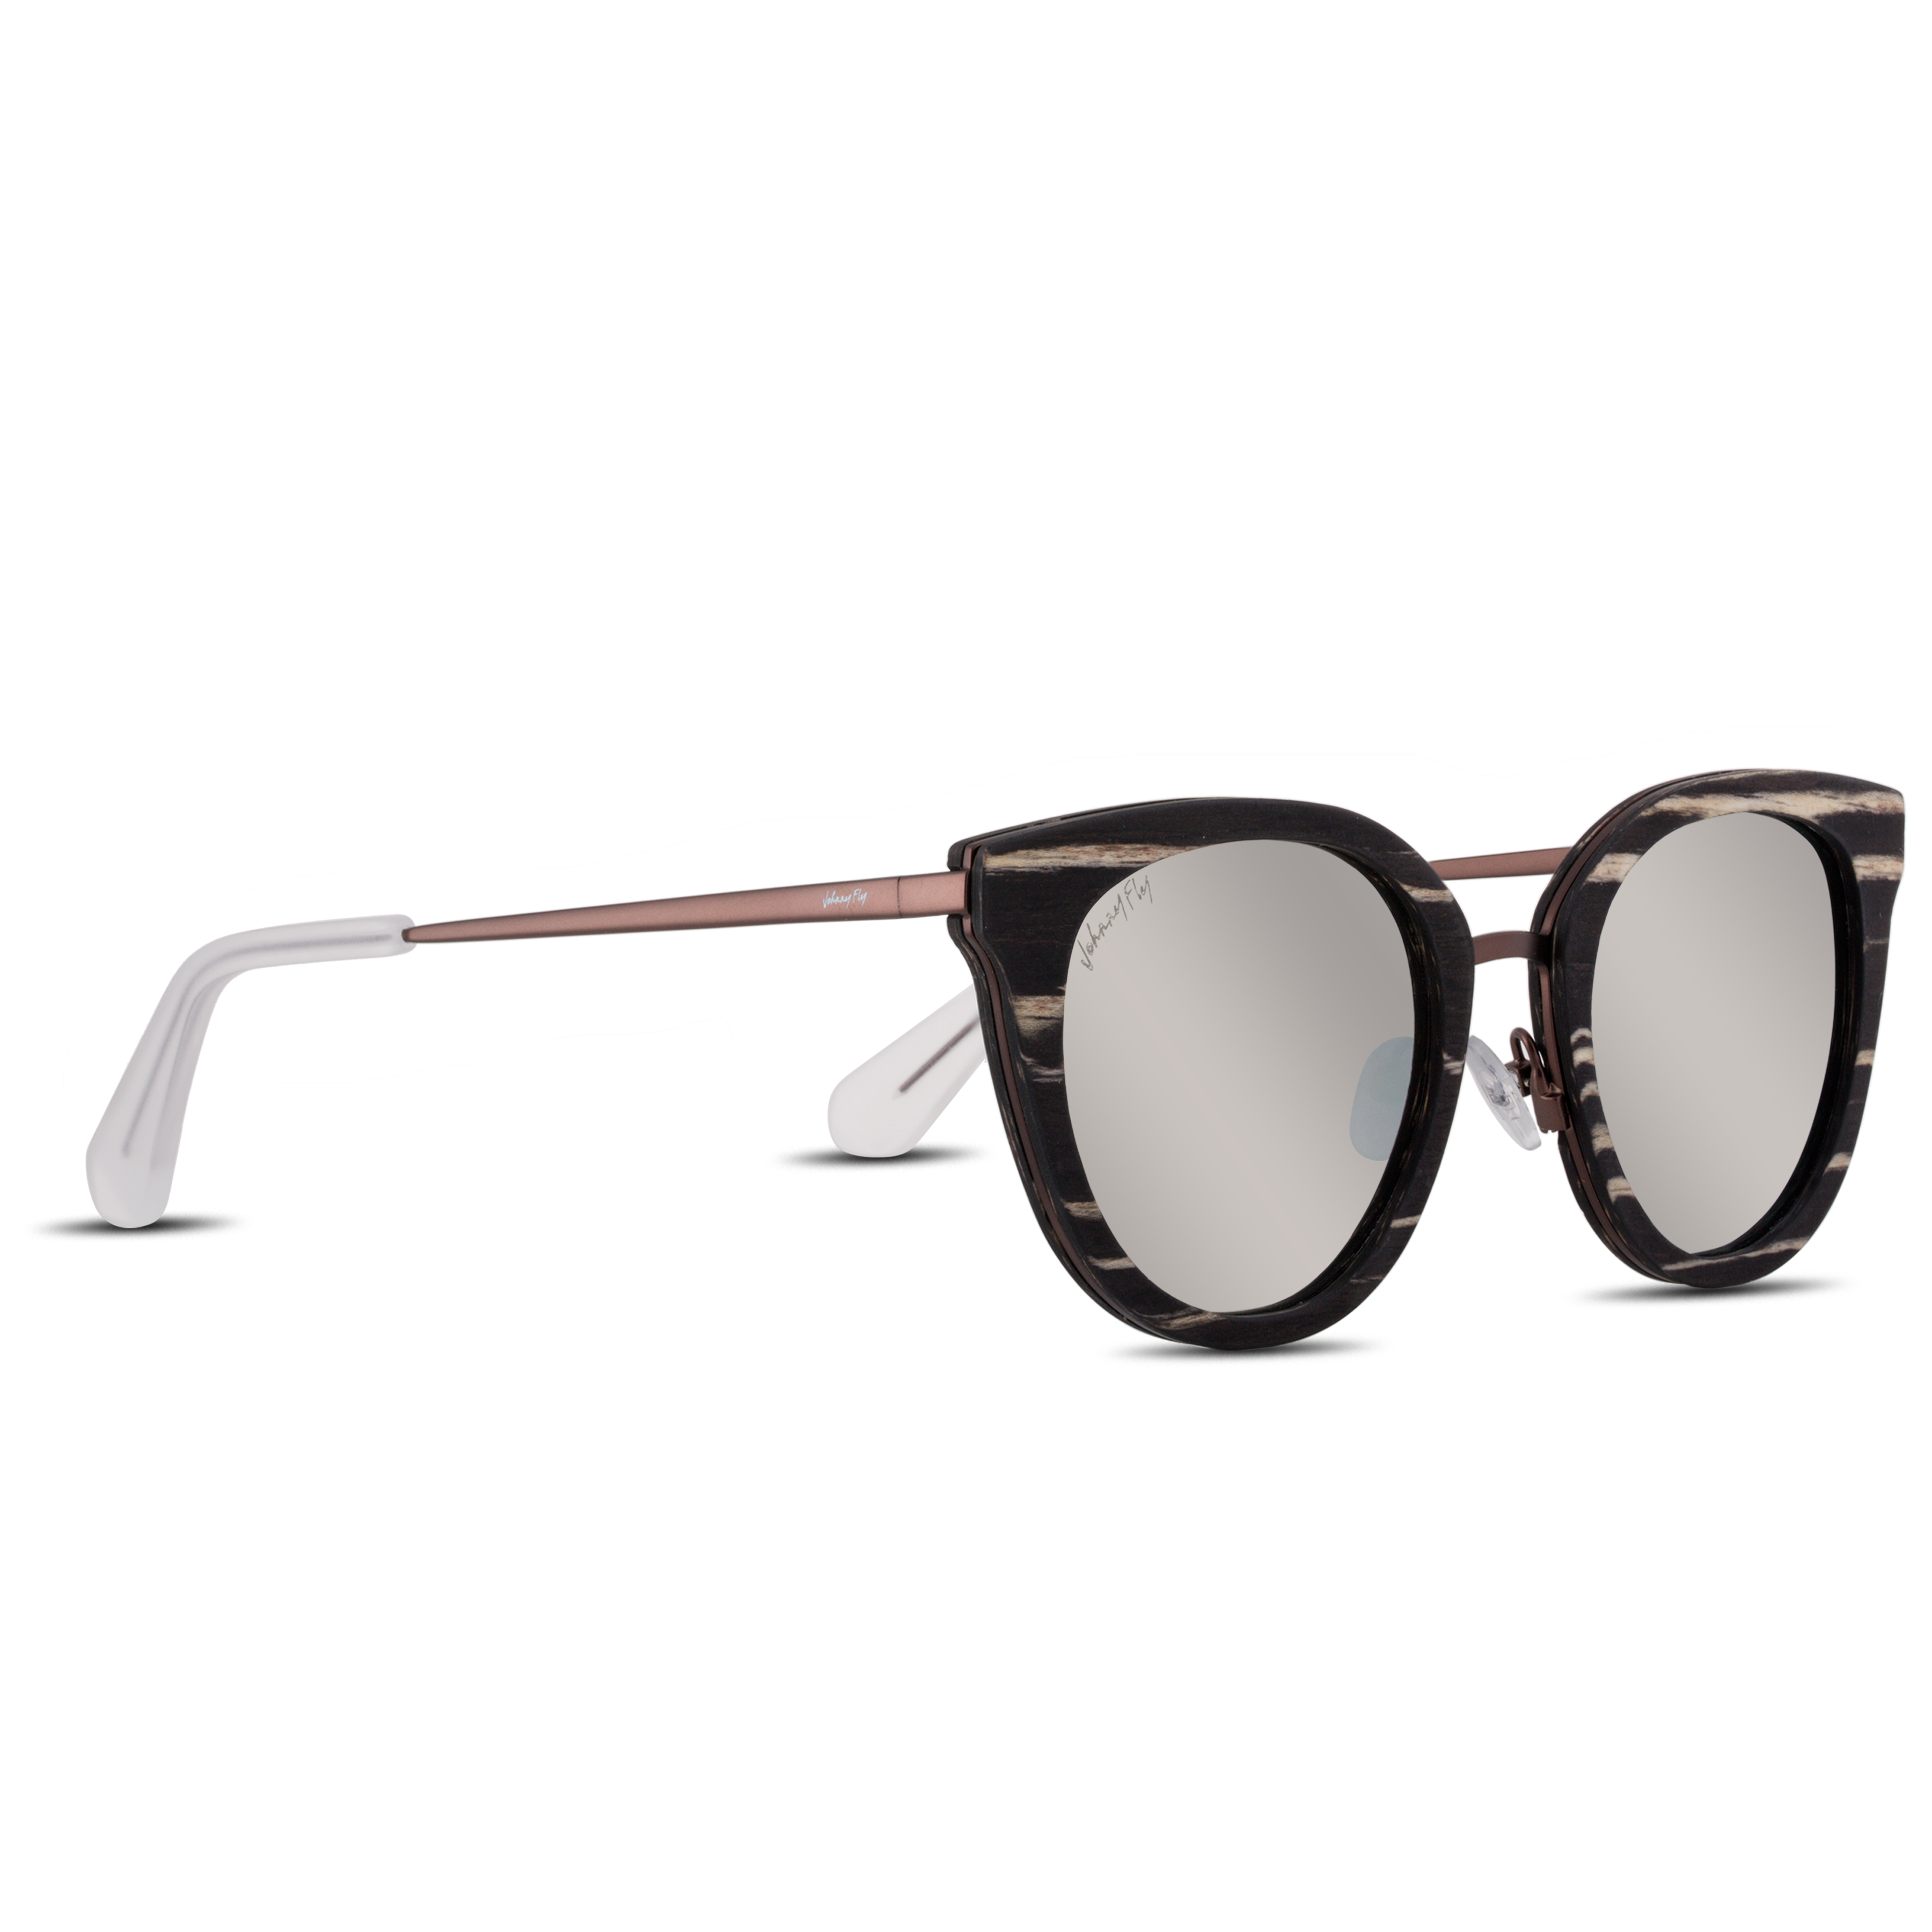 TROI - Black Zebra - Sunglasses - Johnny Fly Eyewear 